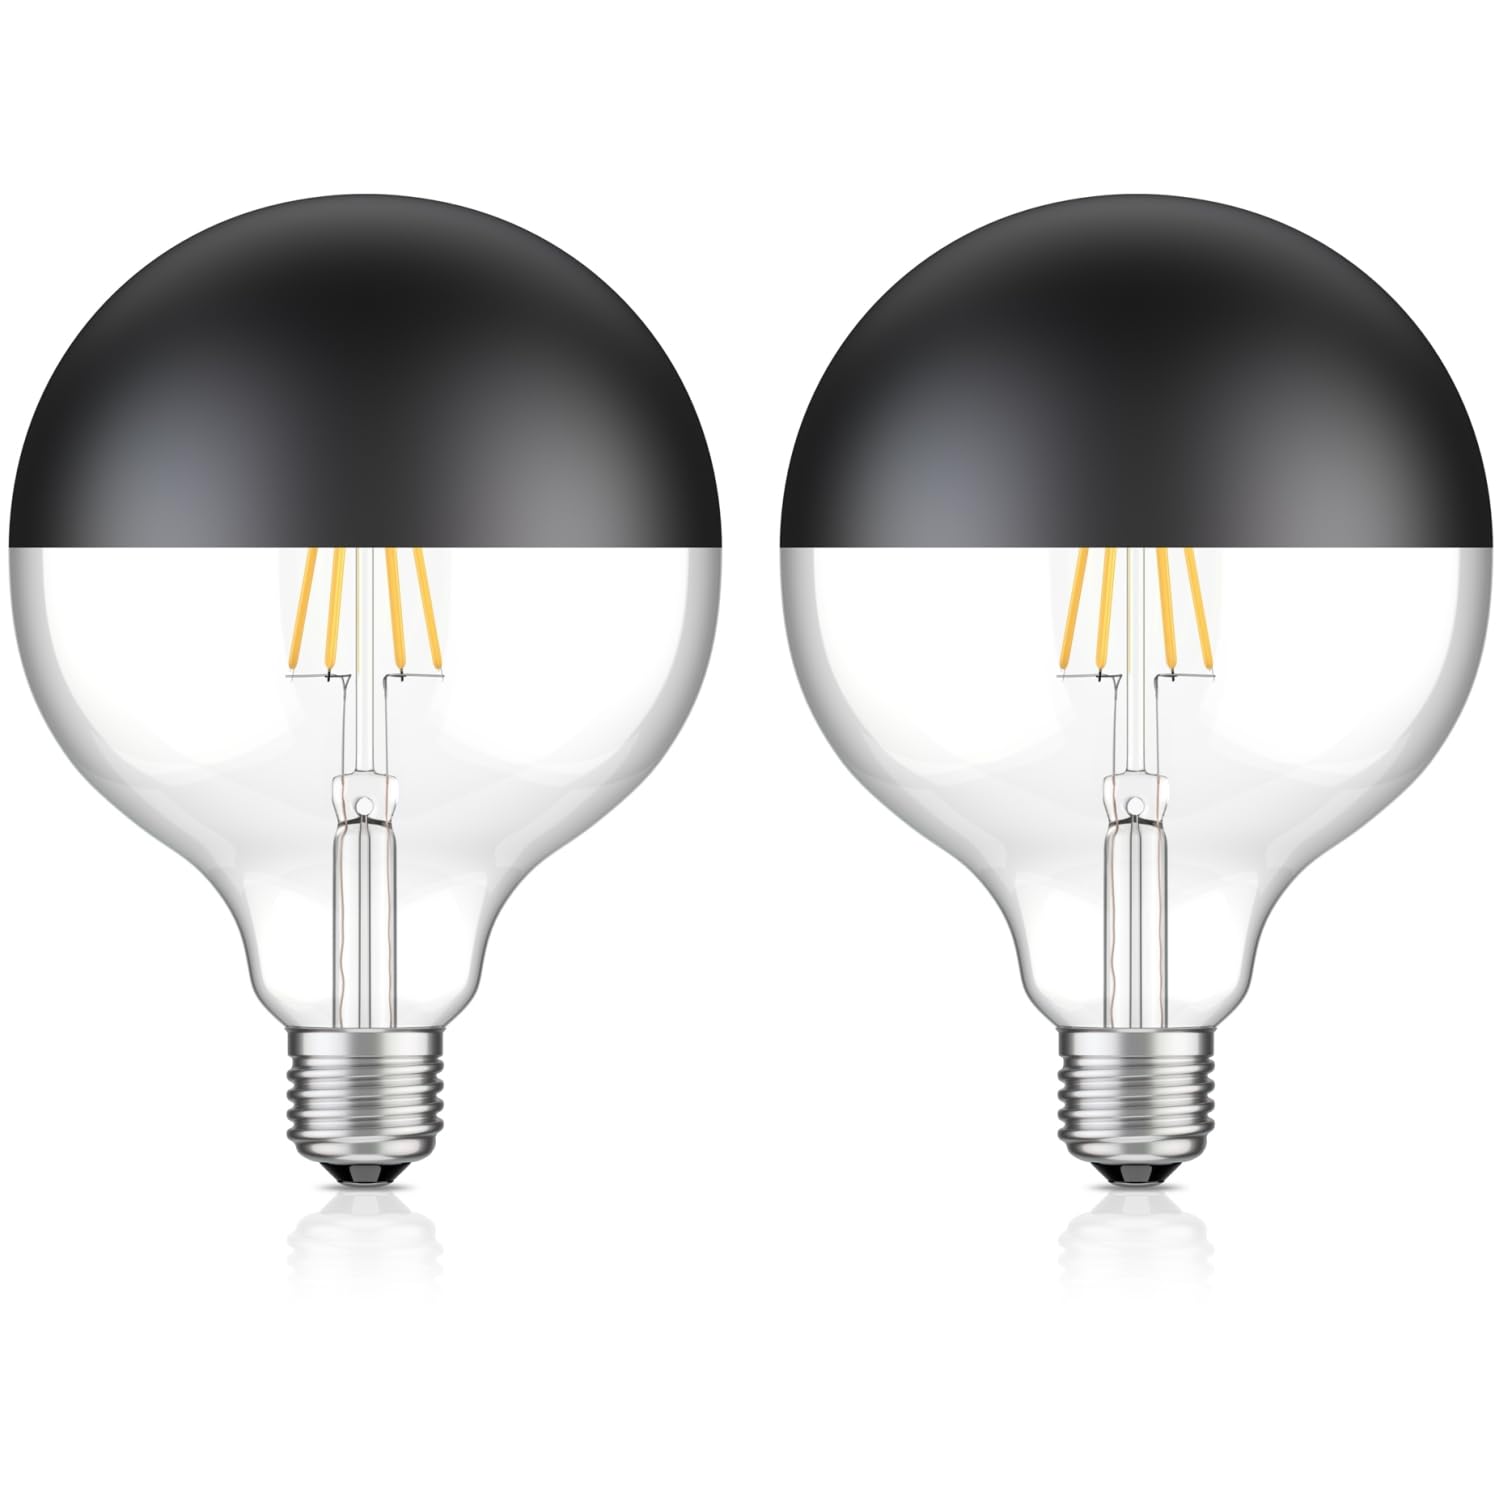 ledscom.de 2 Stück E27 LED Leuchtmittel, G125, warmweiß (2700 K), 6,7 W, 660lm, Kopfspiegel (schwarz)